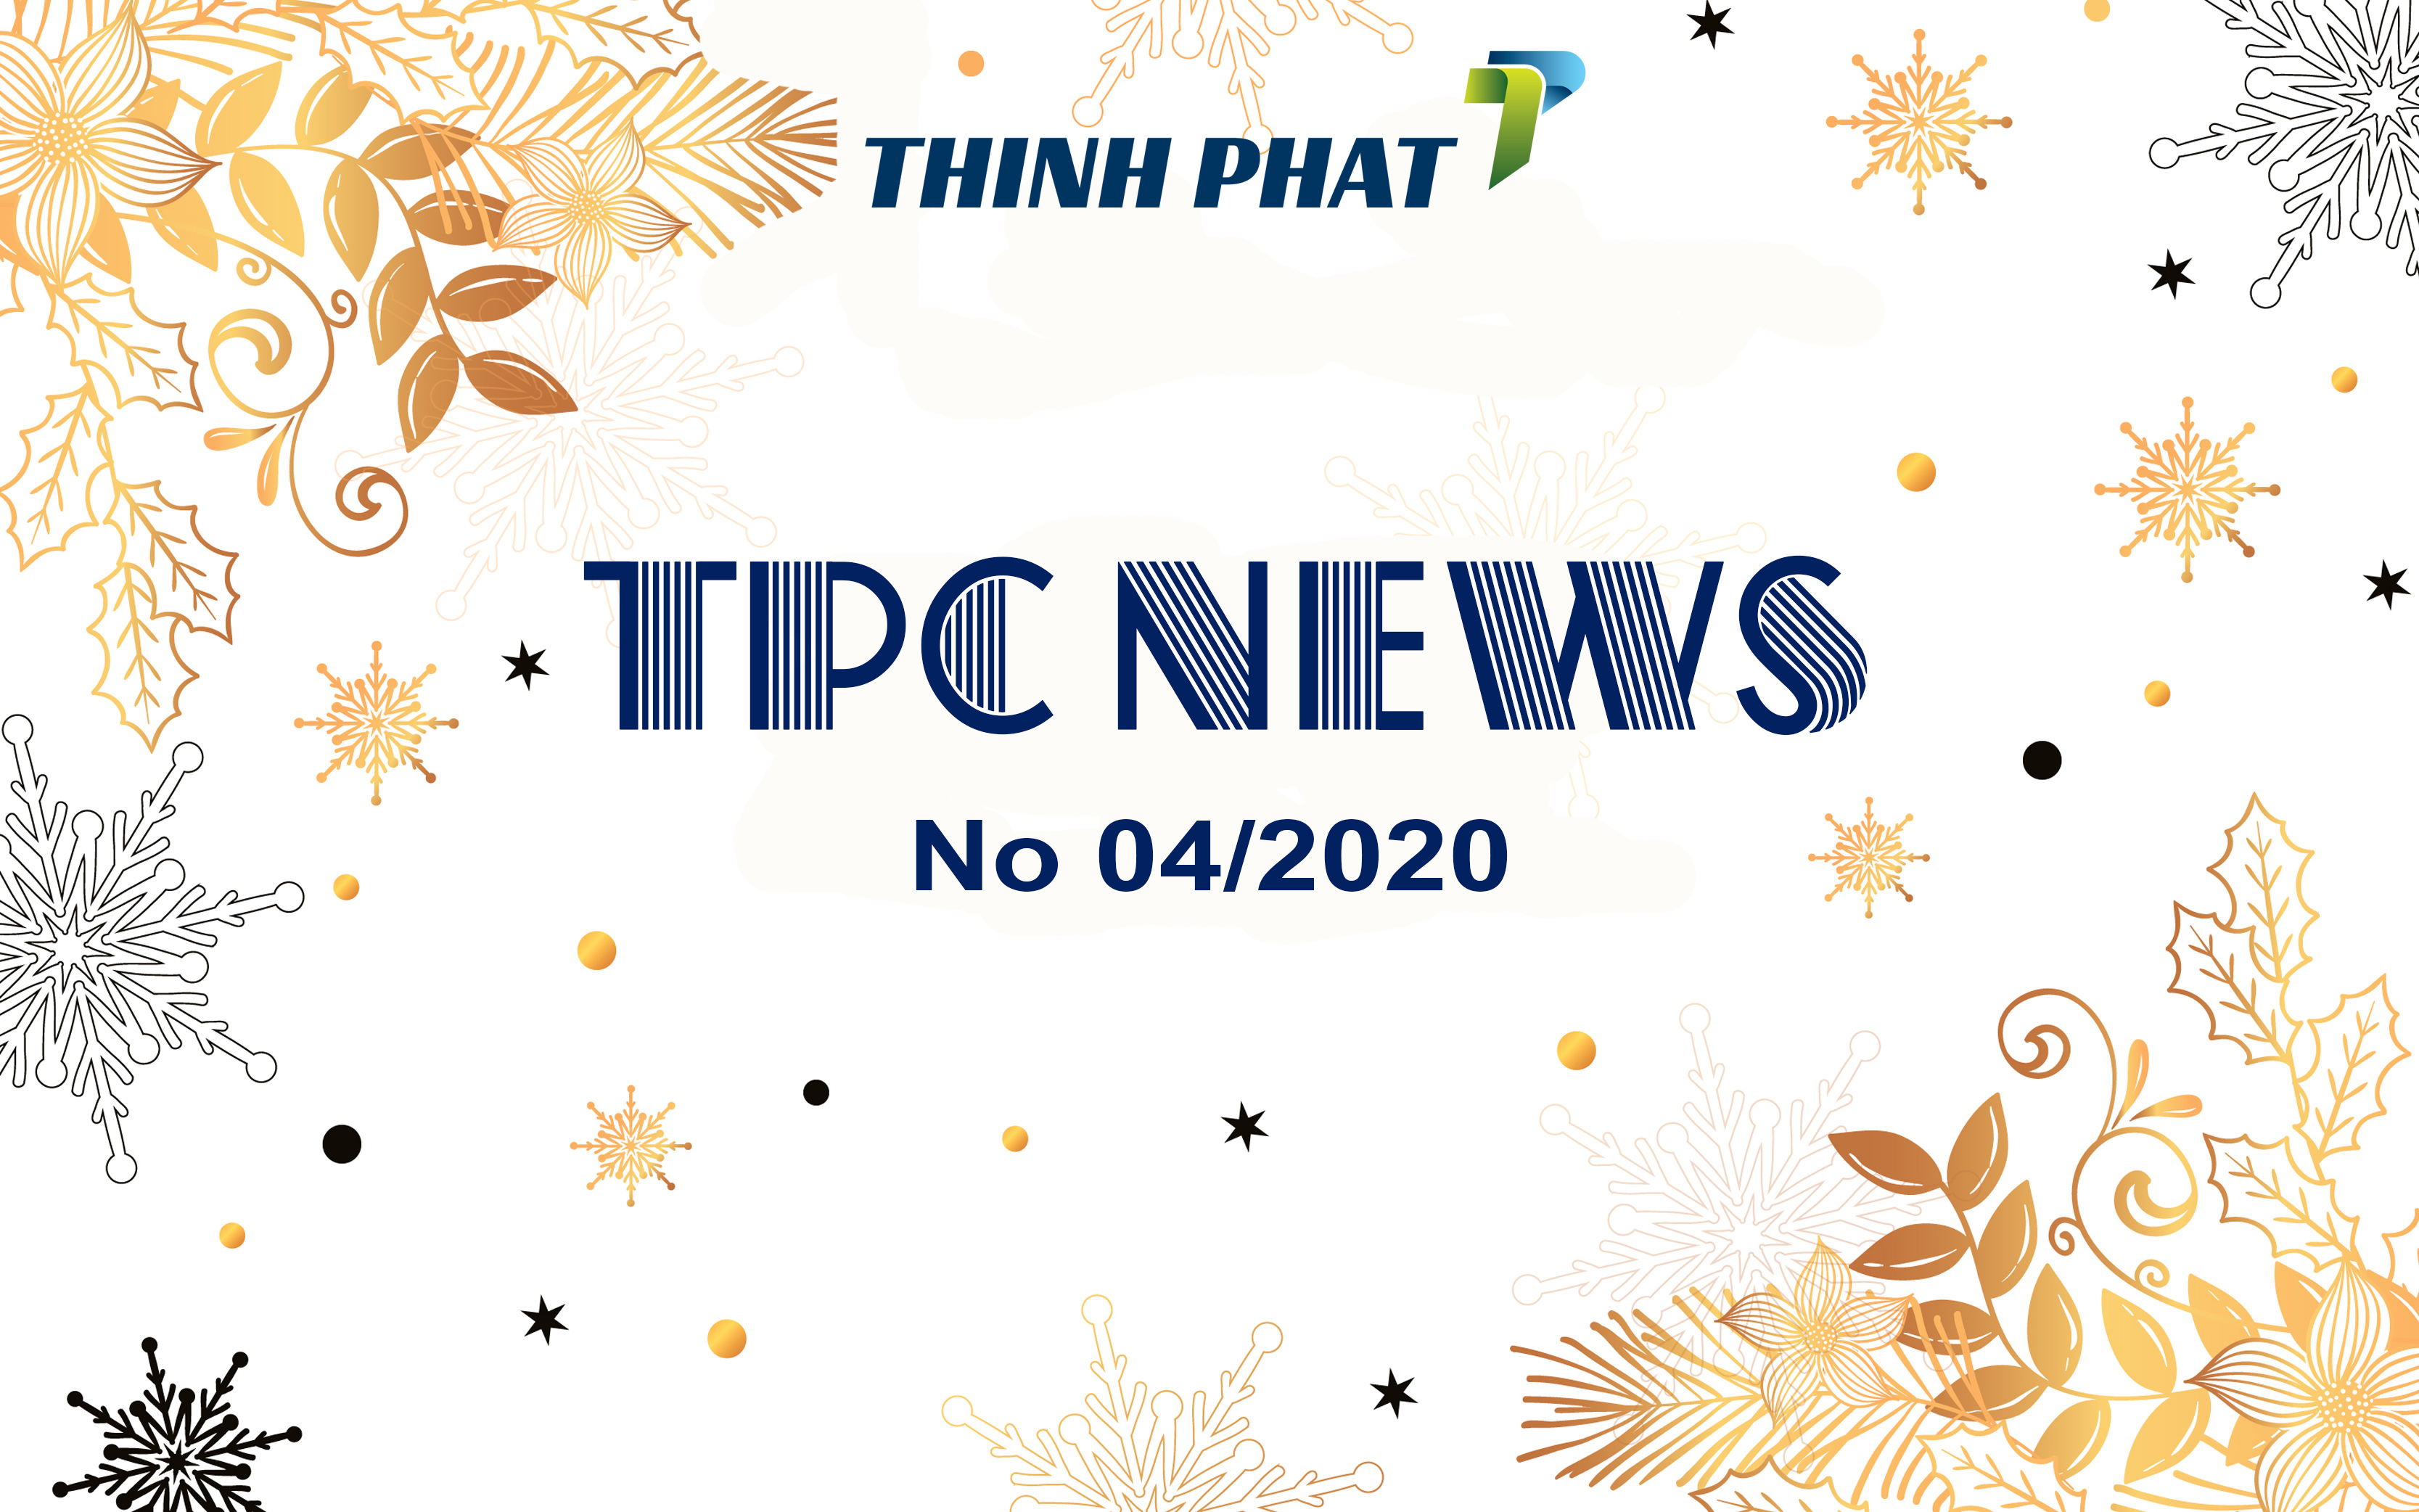 THINHPHAT NEWS NO 4